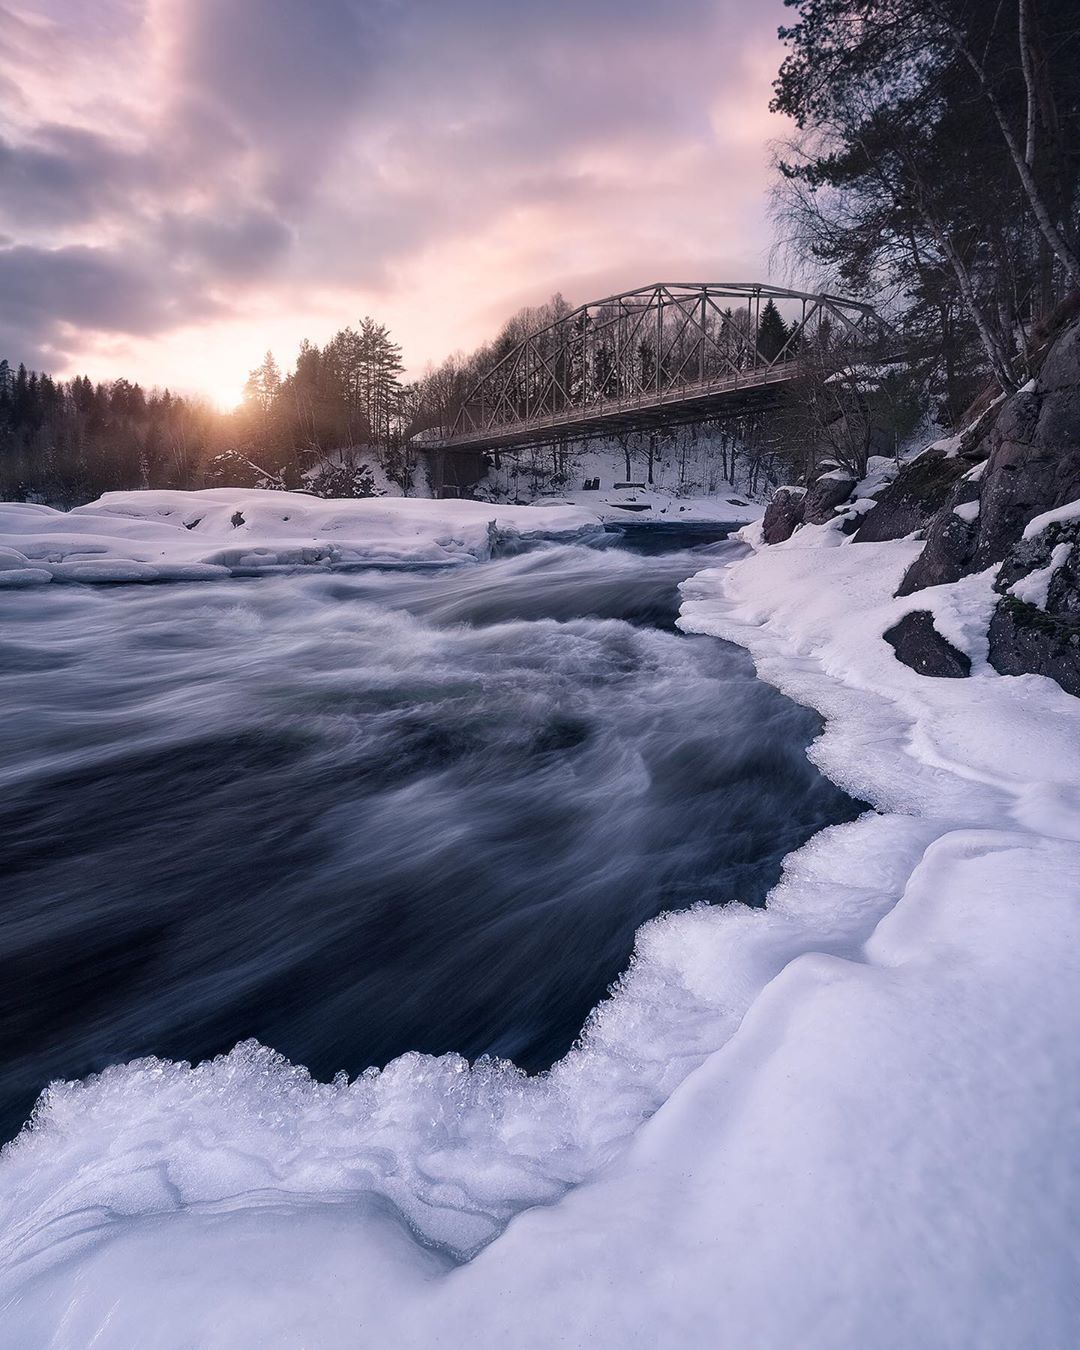 Сказочные пейзажи Норвегии от Ханса Гуннара Аслаксена